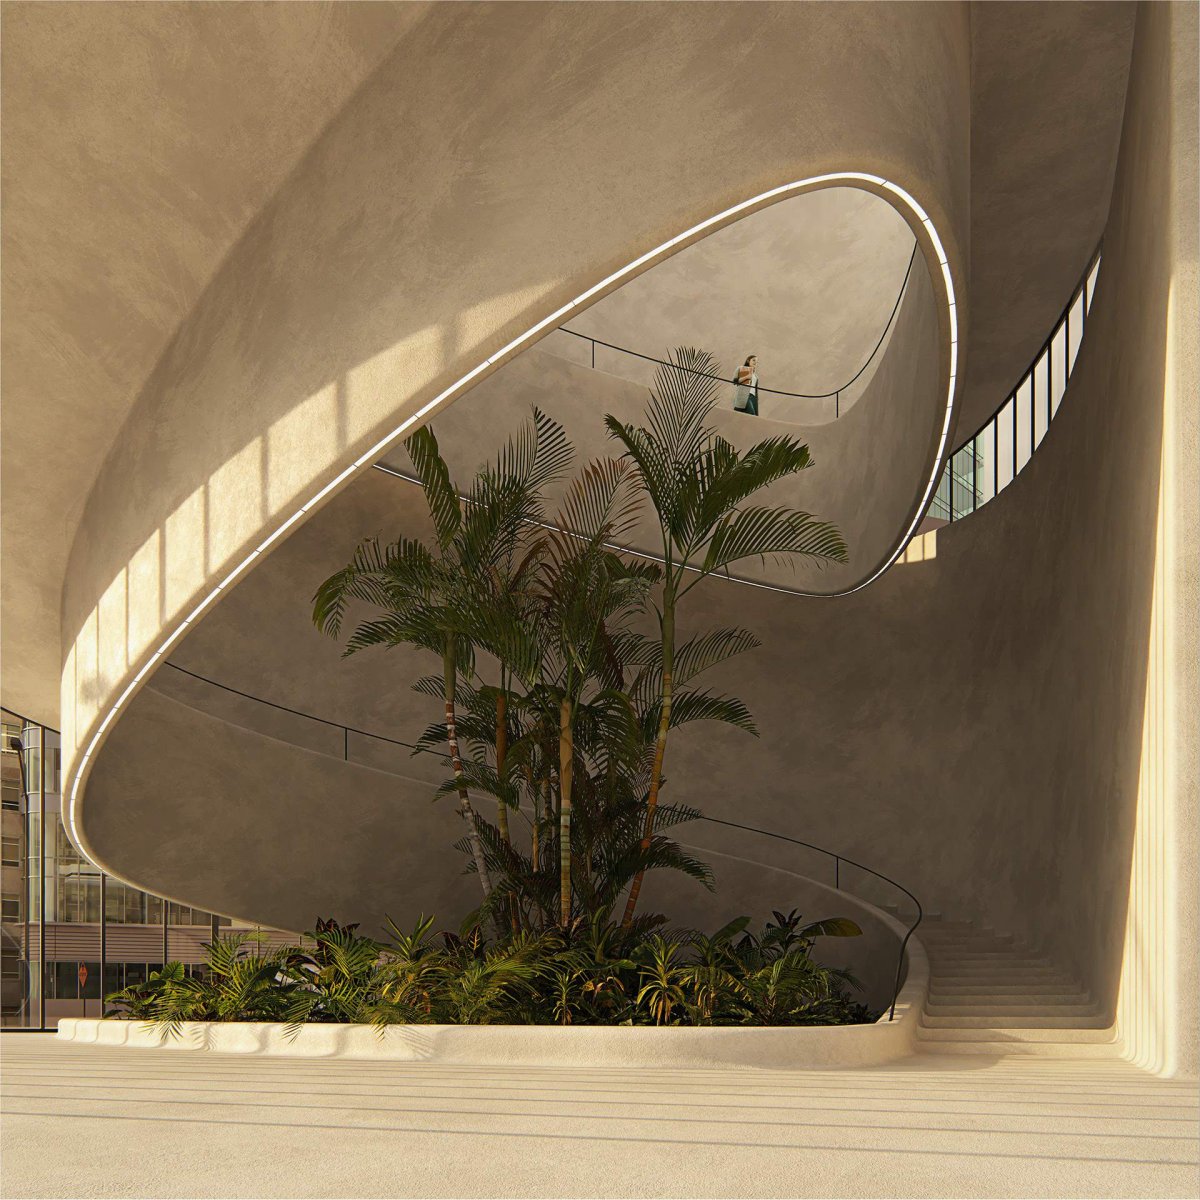 Elegant Architectural Concepts By Javier Valero 8